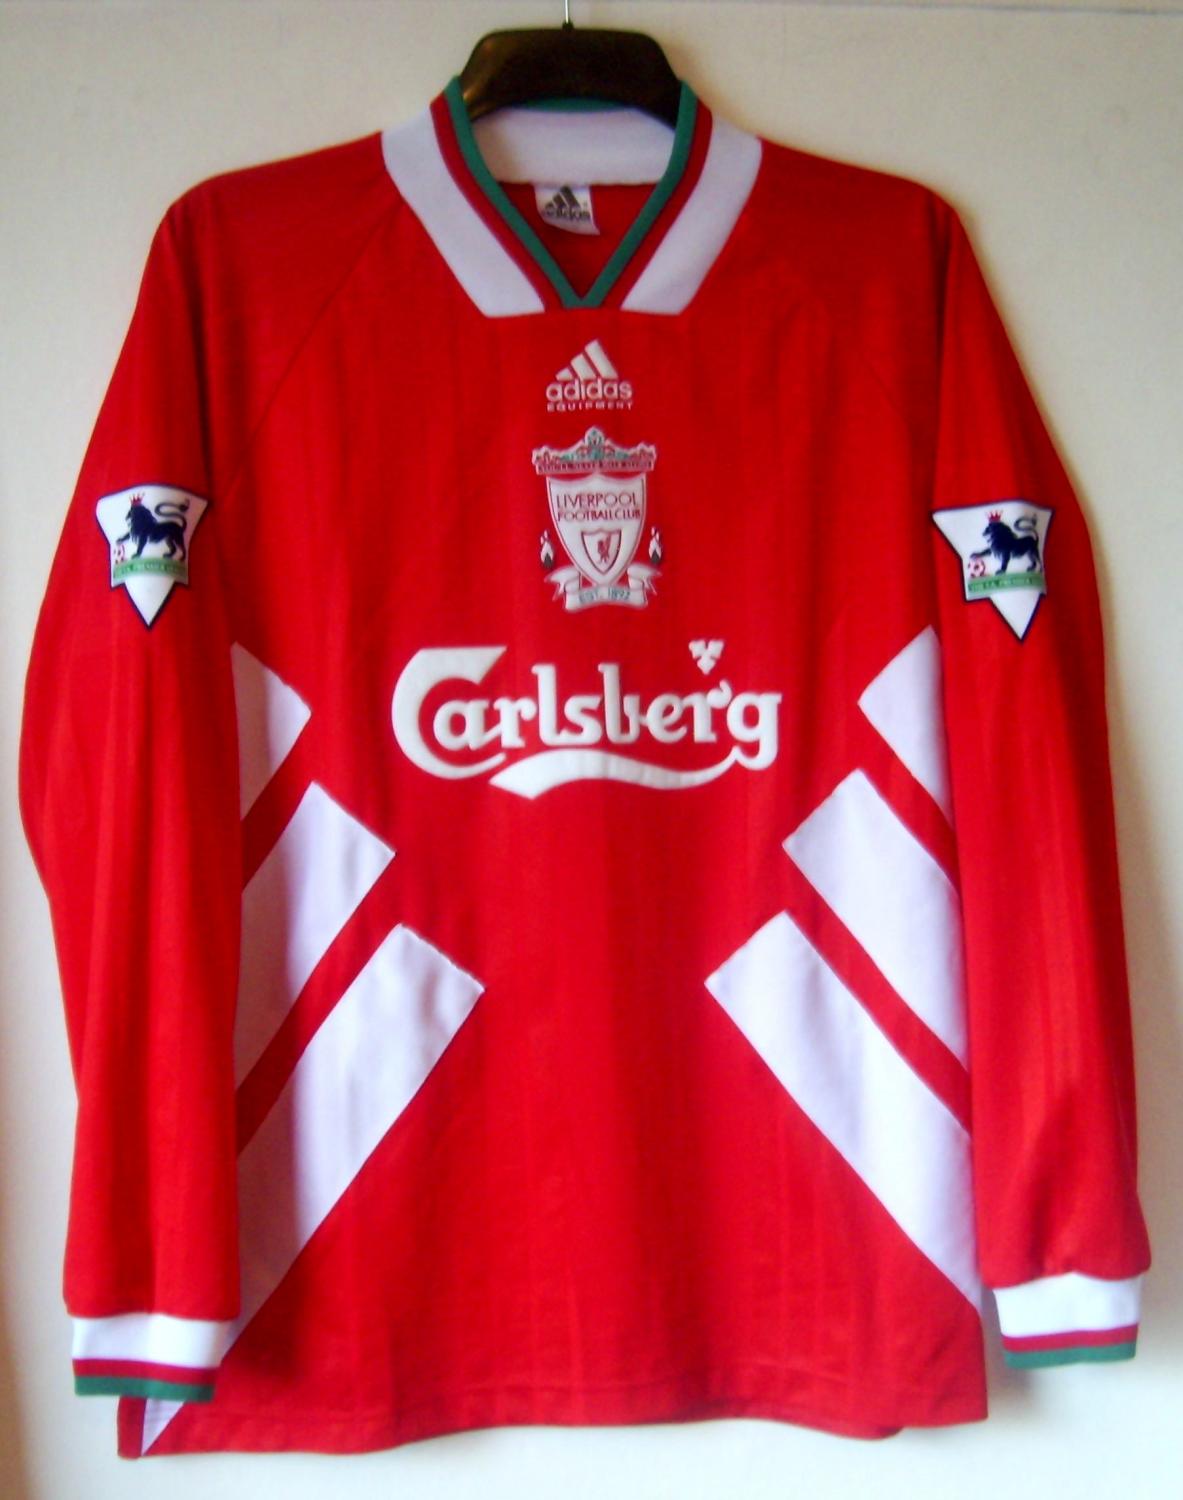 Liverpool Home football shirt 1993 - 1995. Sponsored by Carlsberg